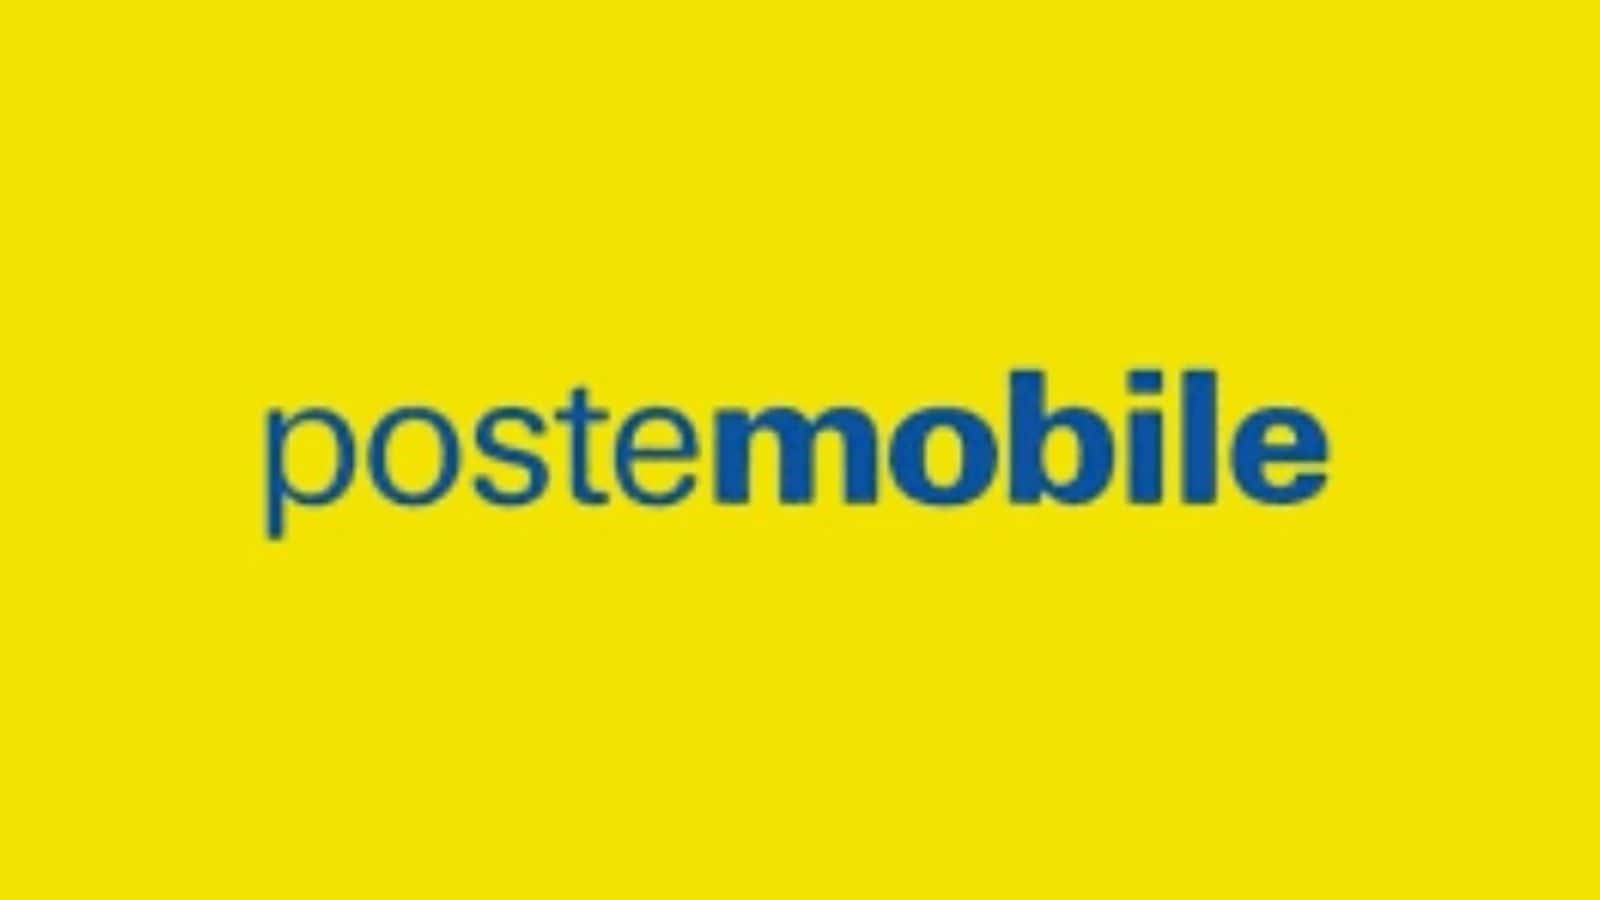 PosteMobile wow days 50 